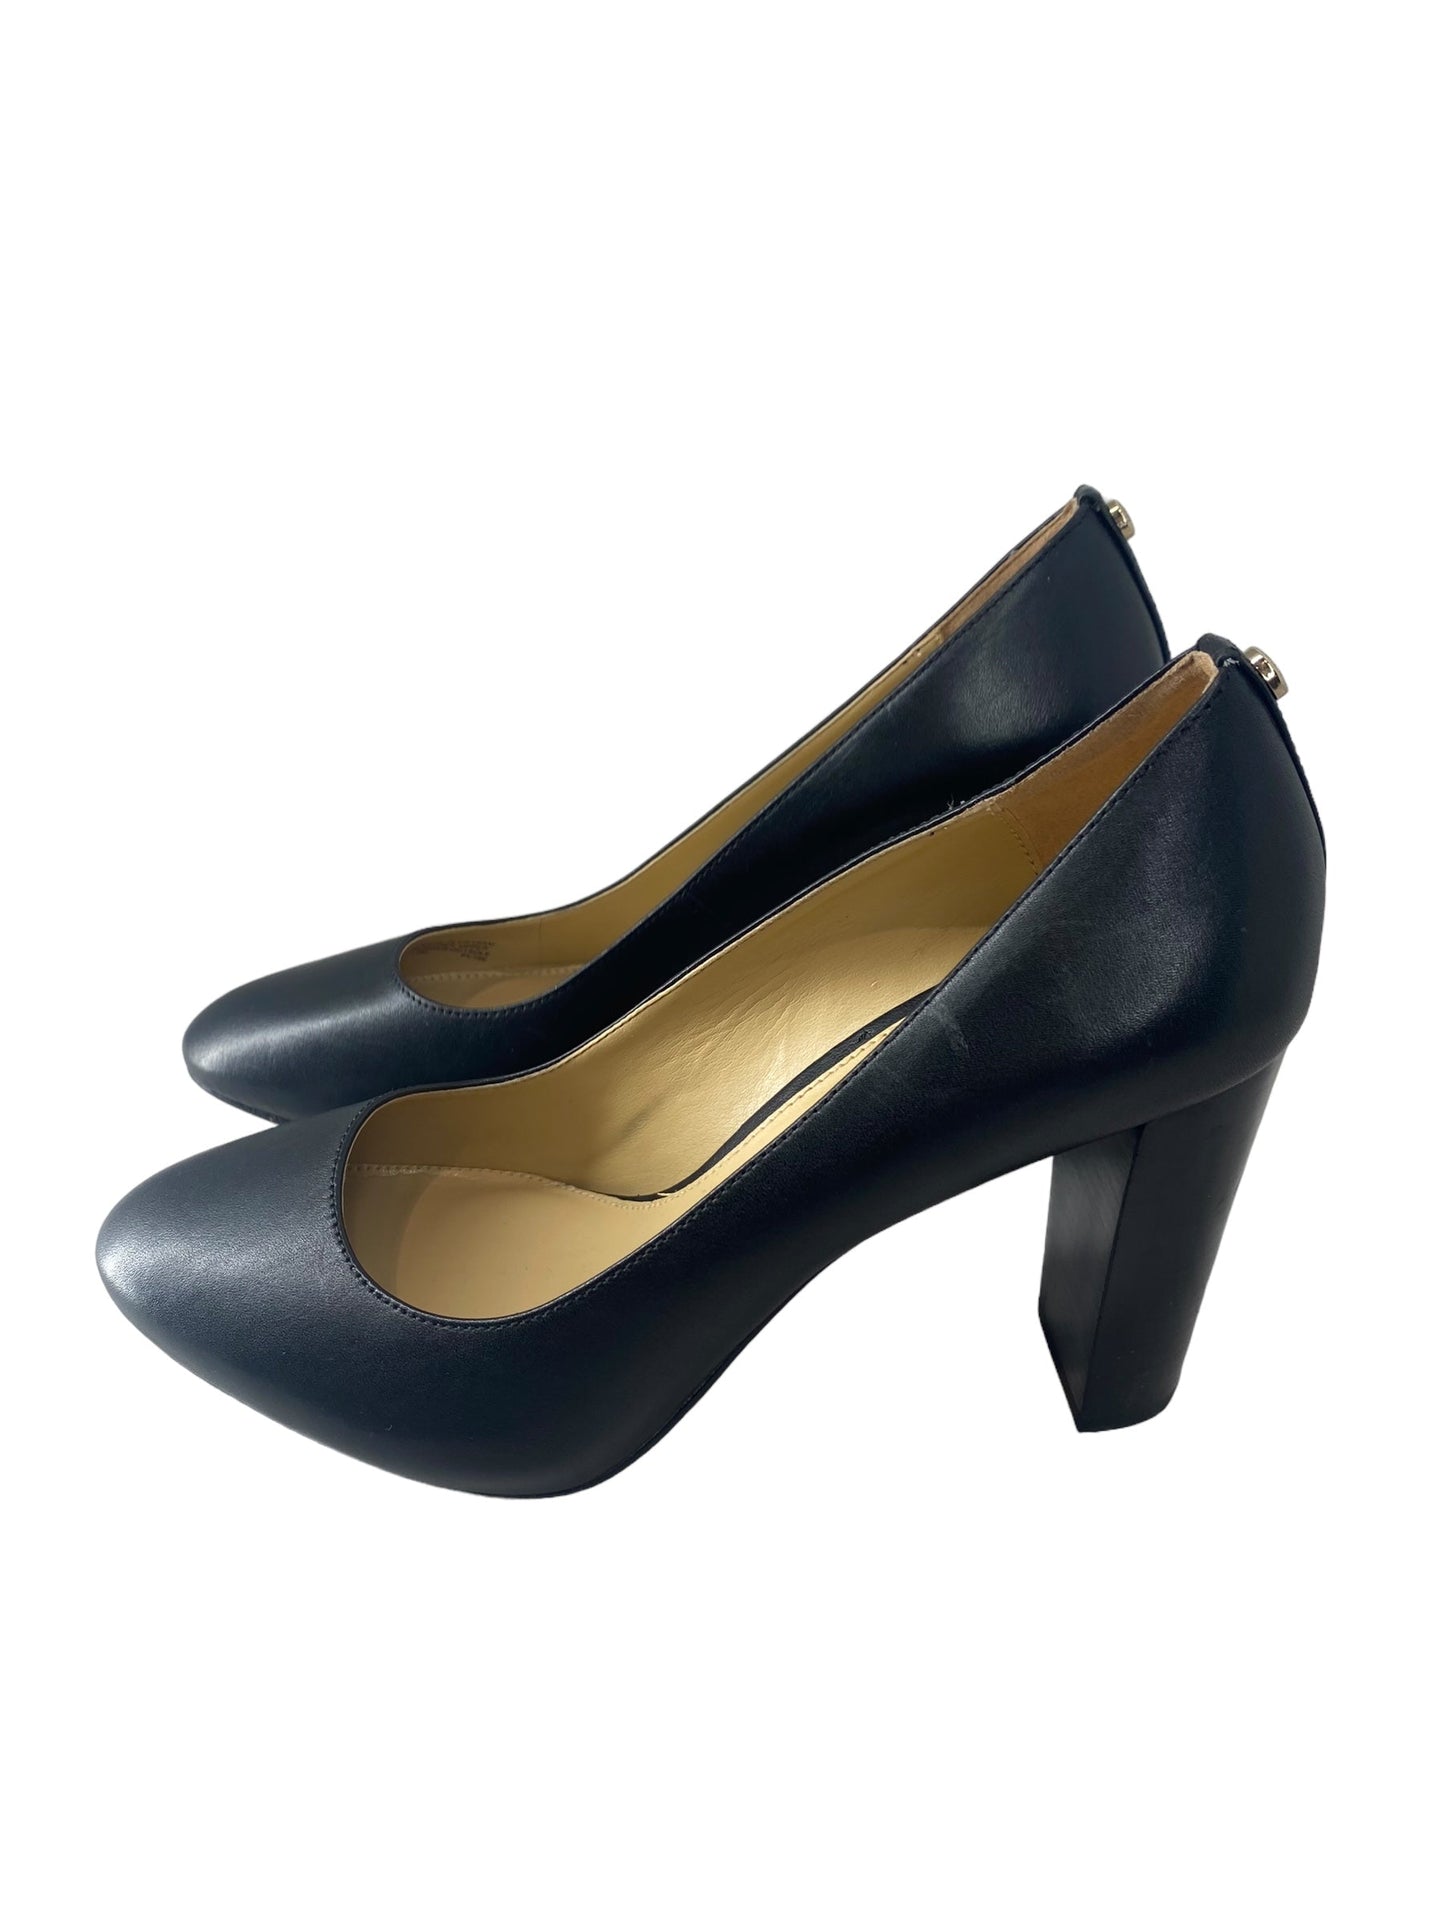 Black Shoes Heels Block Michael Kors, Size 7.5